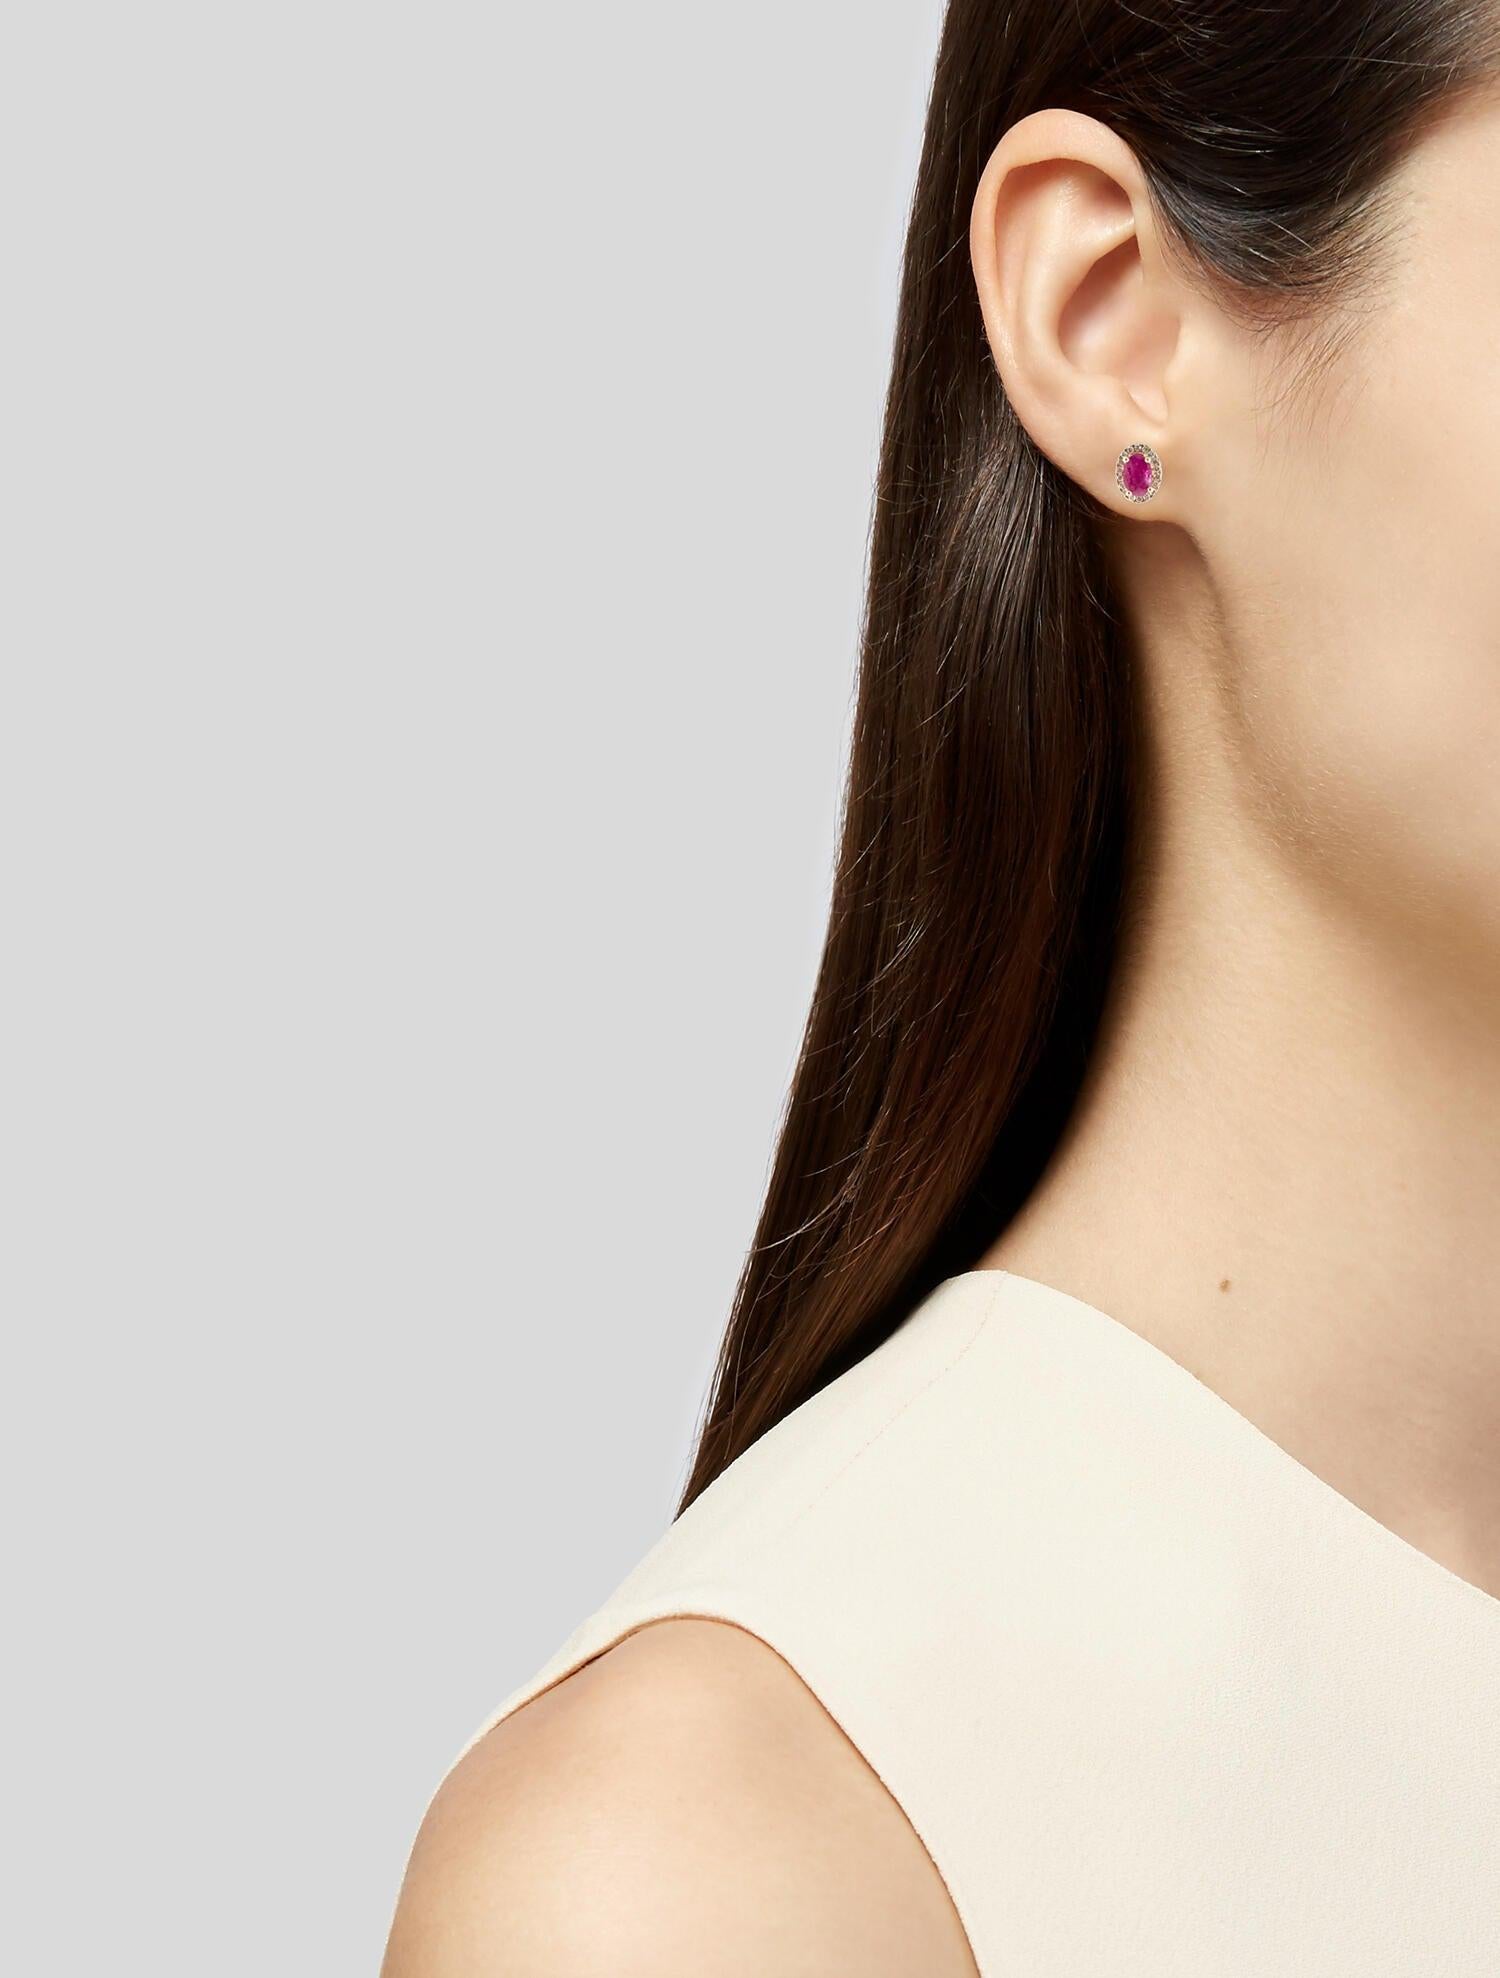 Stunning 14K 1.52ctw Ruby & Diamond Studs - Elegant Gemstone Earrings For Sale 1